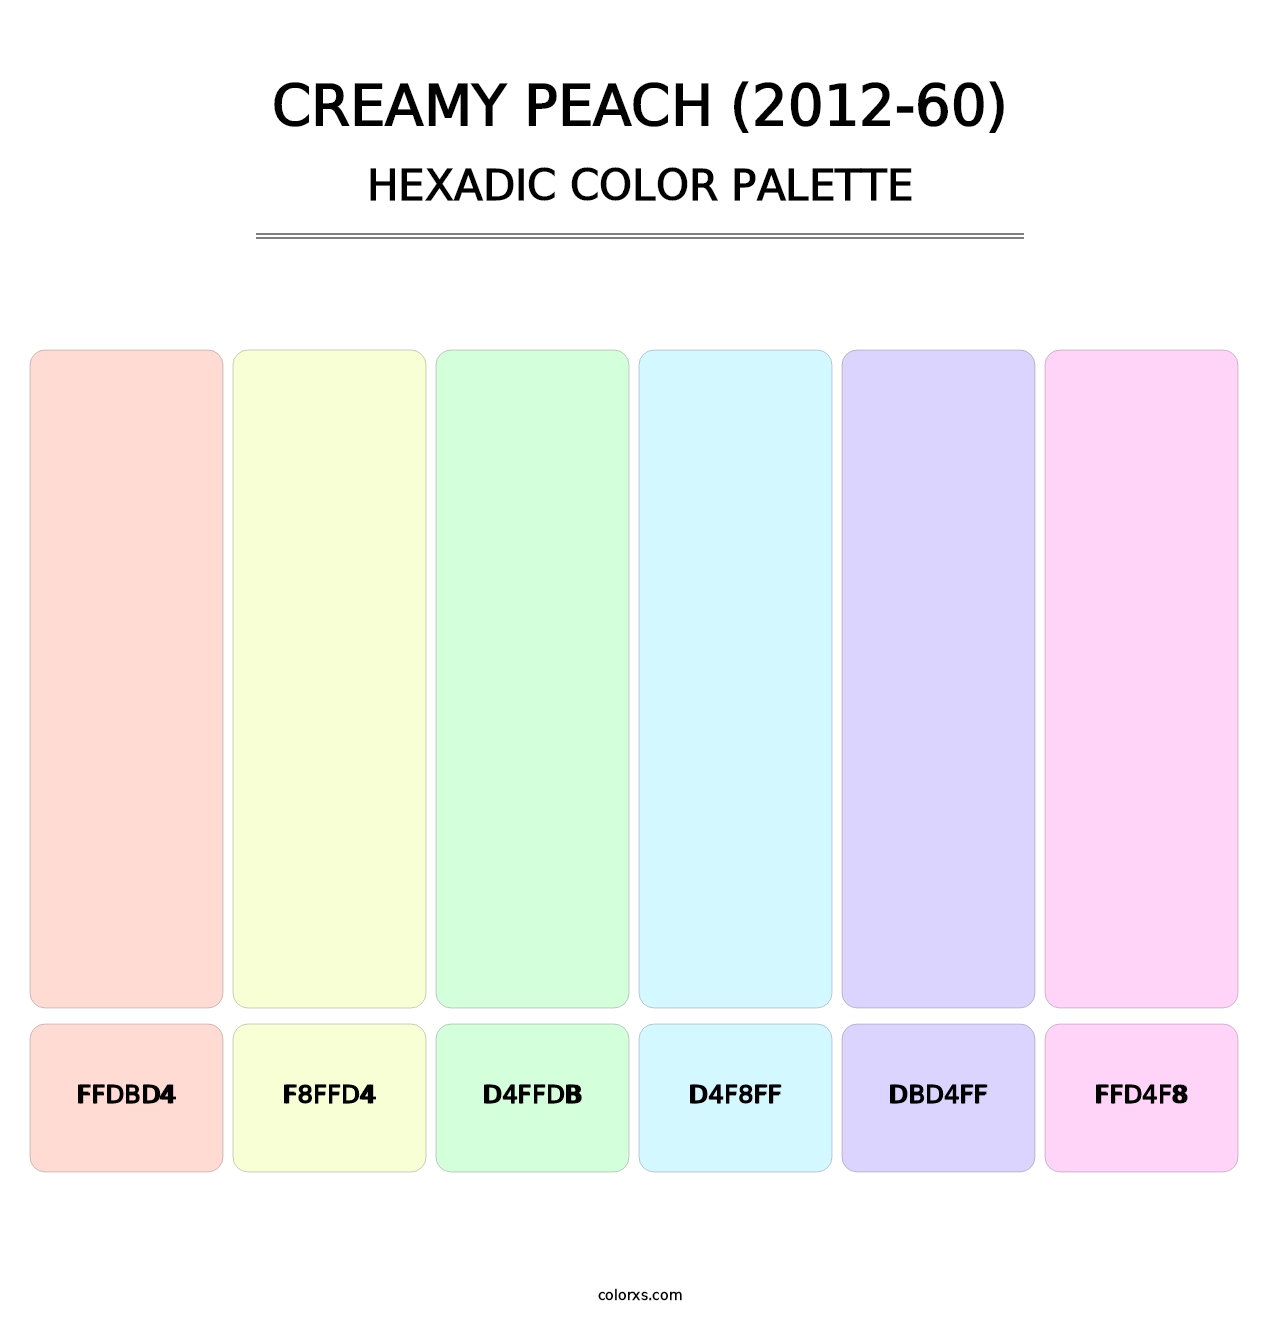 Creamy Peach (2012-60) - Hexadic Color Palette